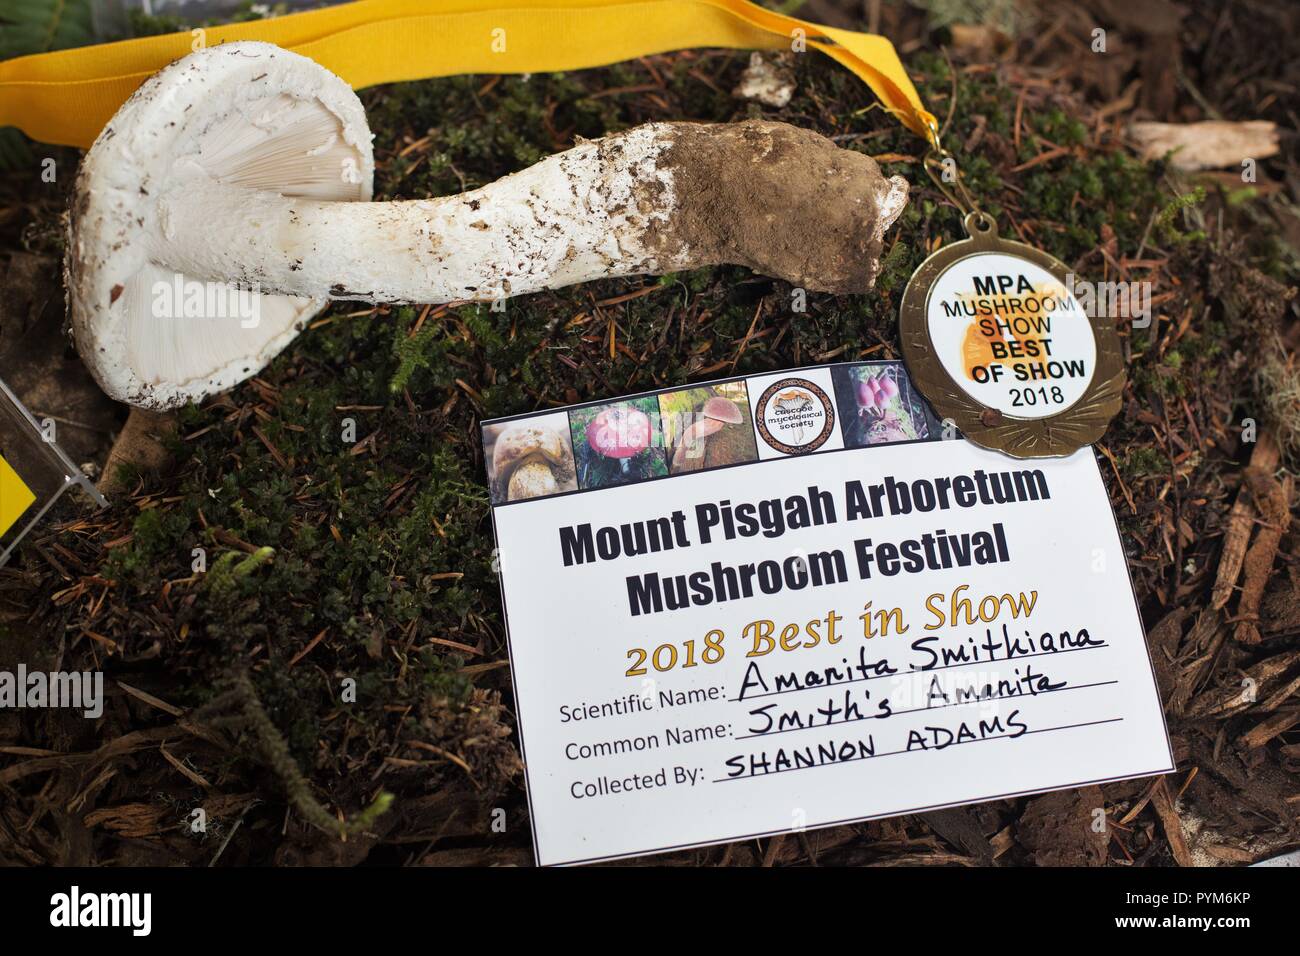 An amanita smithiana mushroom, best in show at the Mushroom Festival in Eugene, OR, USA. Stock Photo